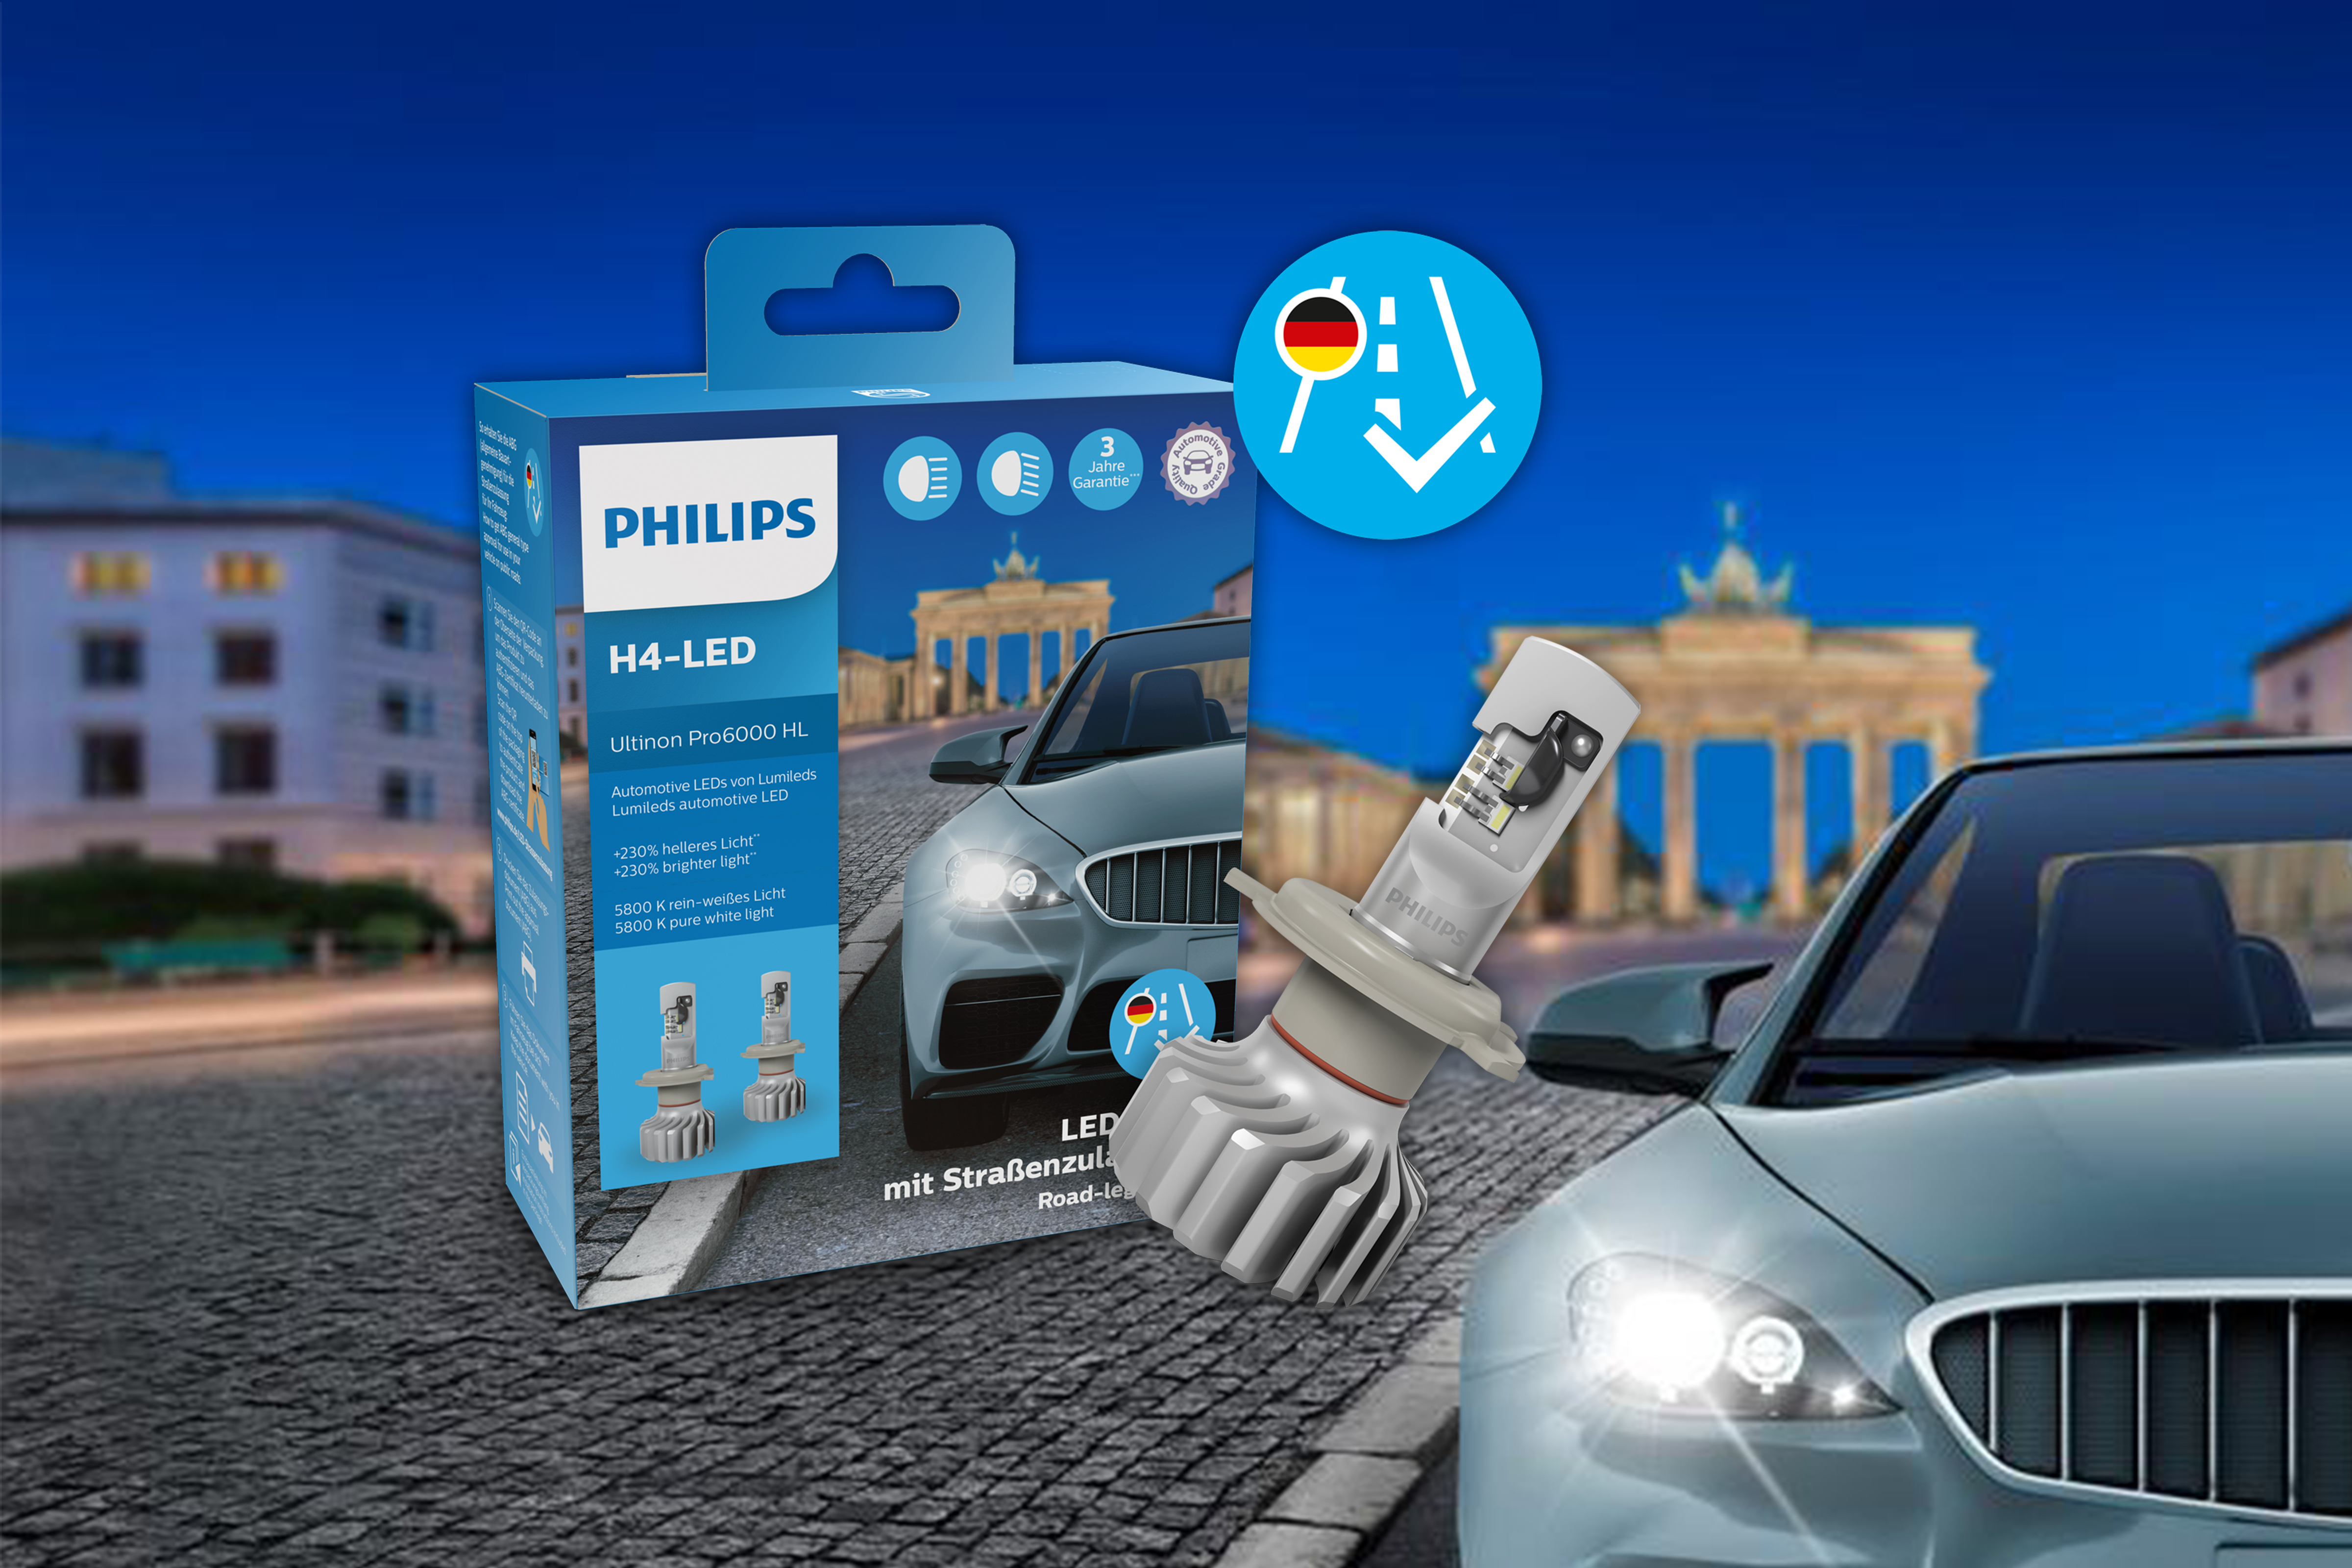 H4 LED Philips Ultinon Pro6000 mit Straßenzulassung, Test